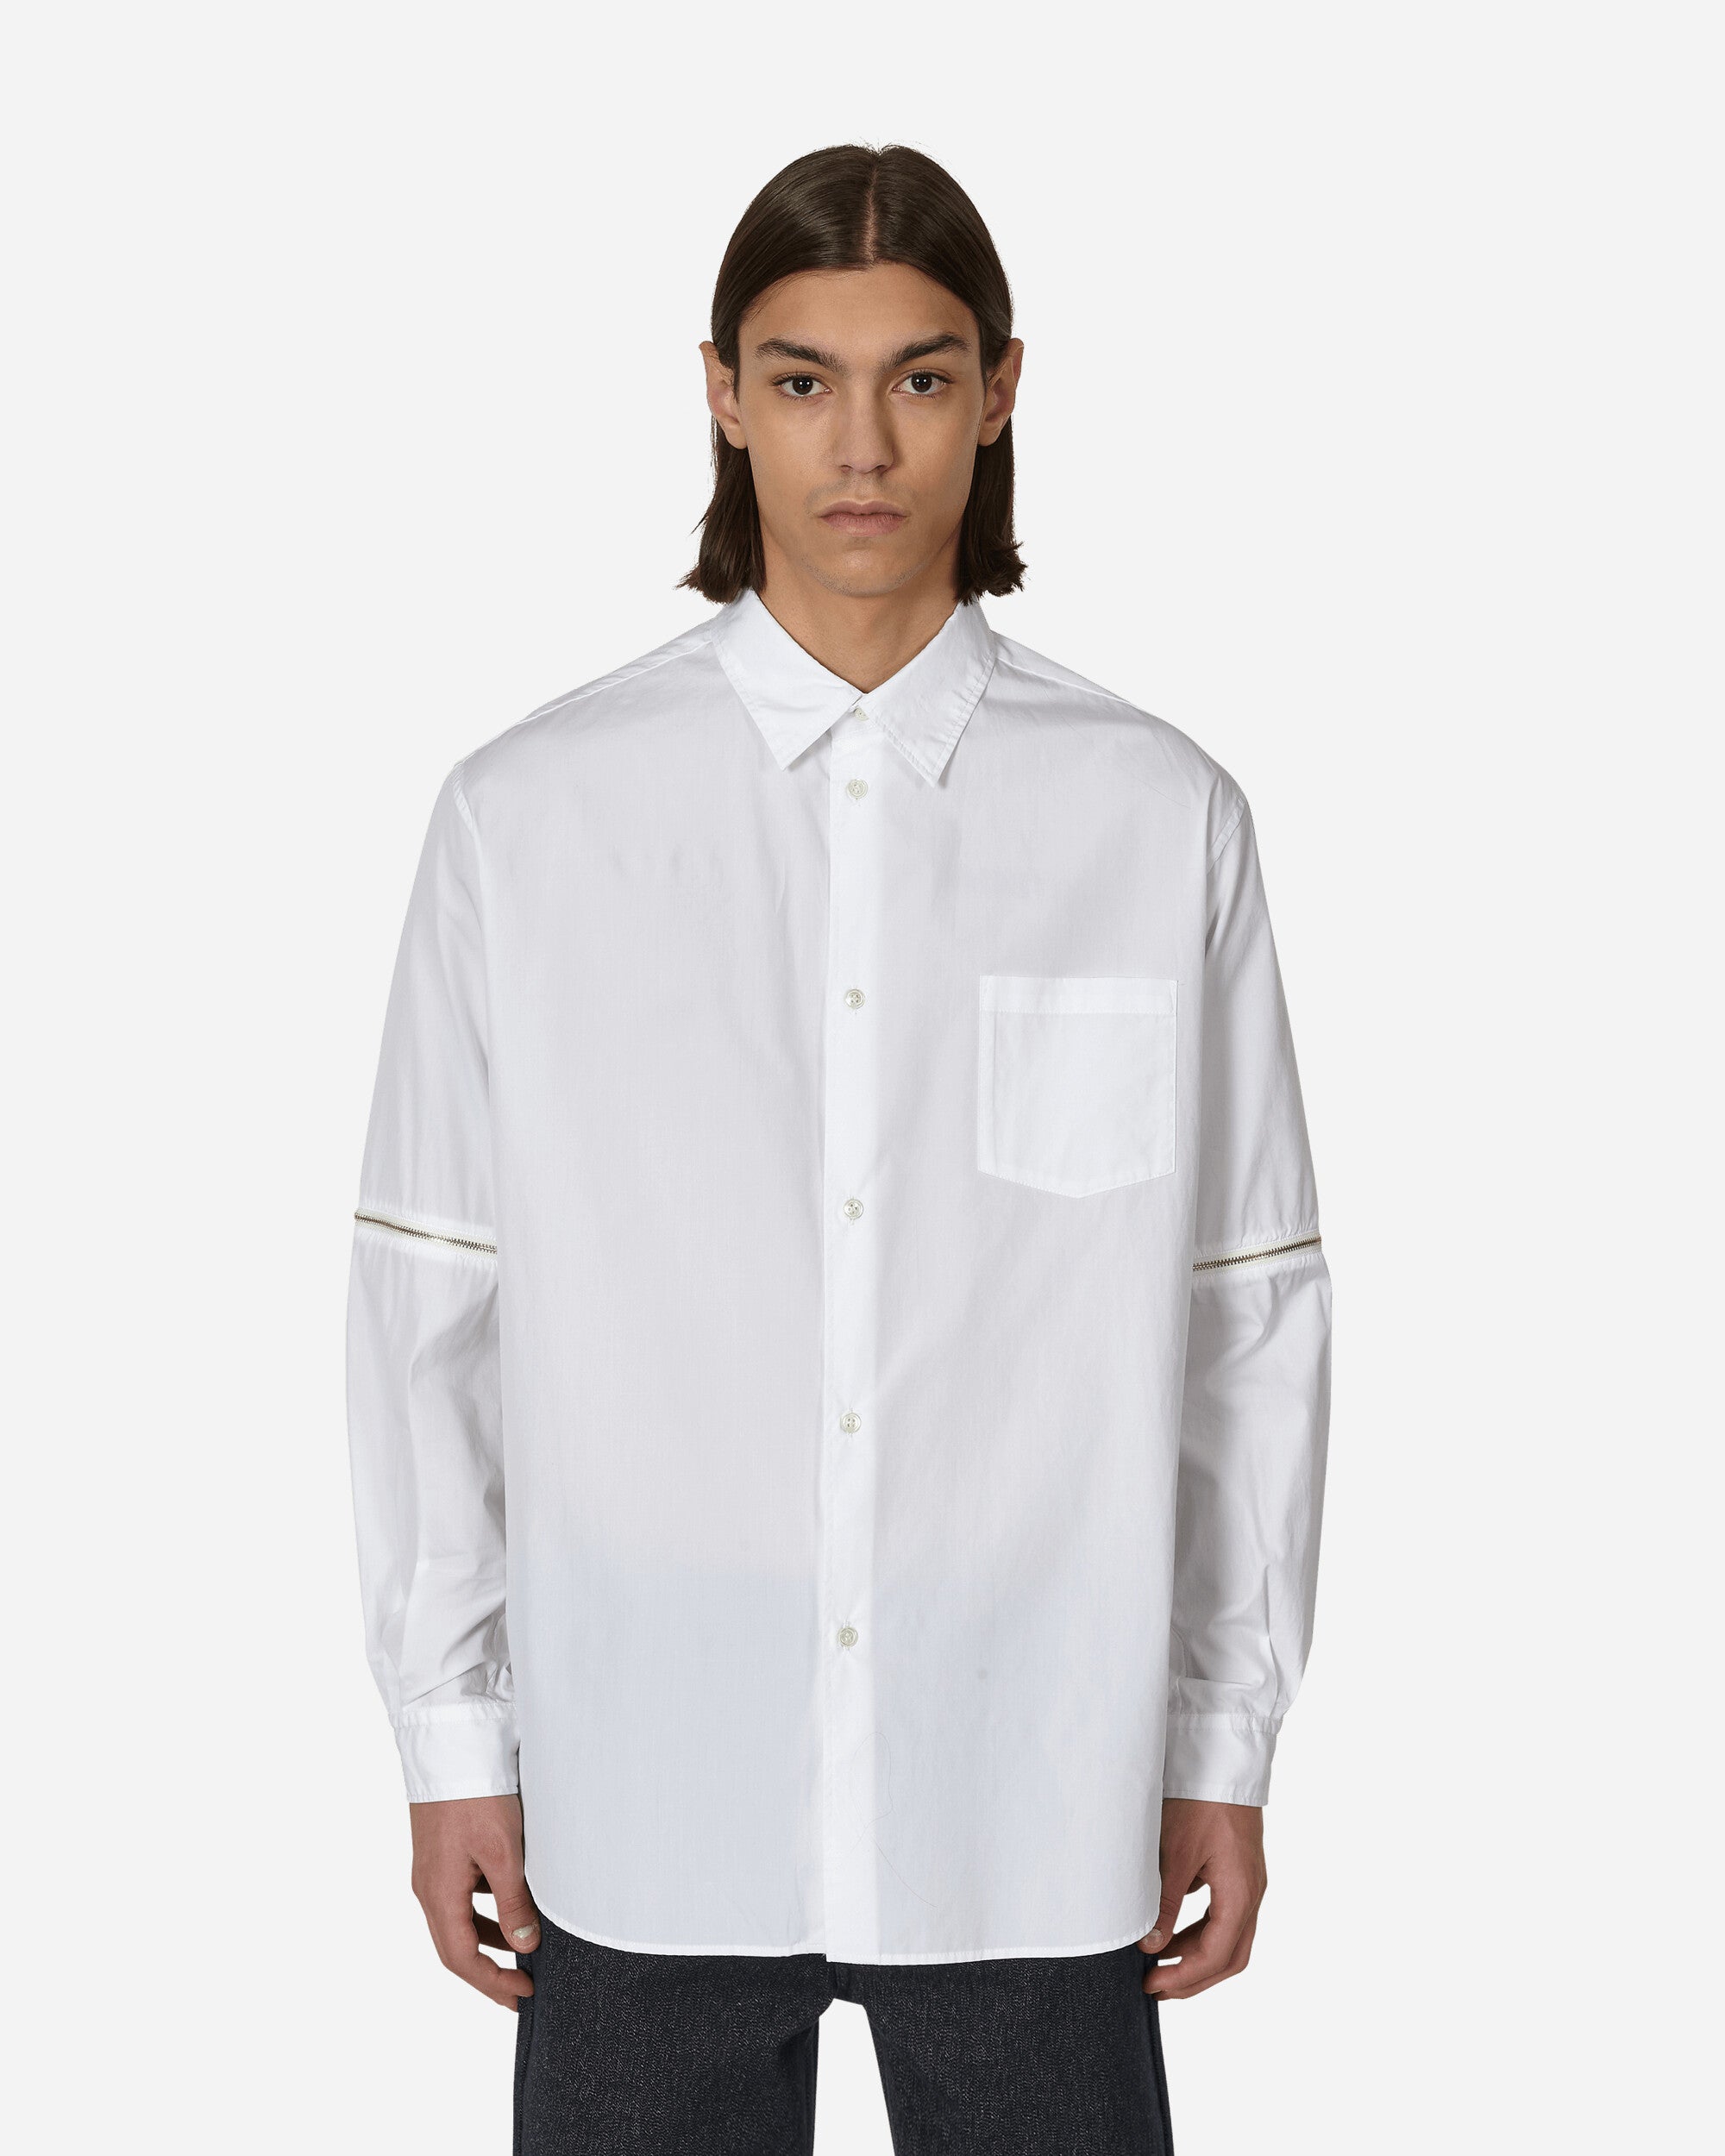 Undercover Zipper Shirt White Shirts Longsleeve Shirt UC1C4407-1 001